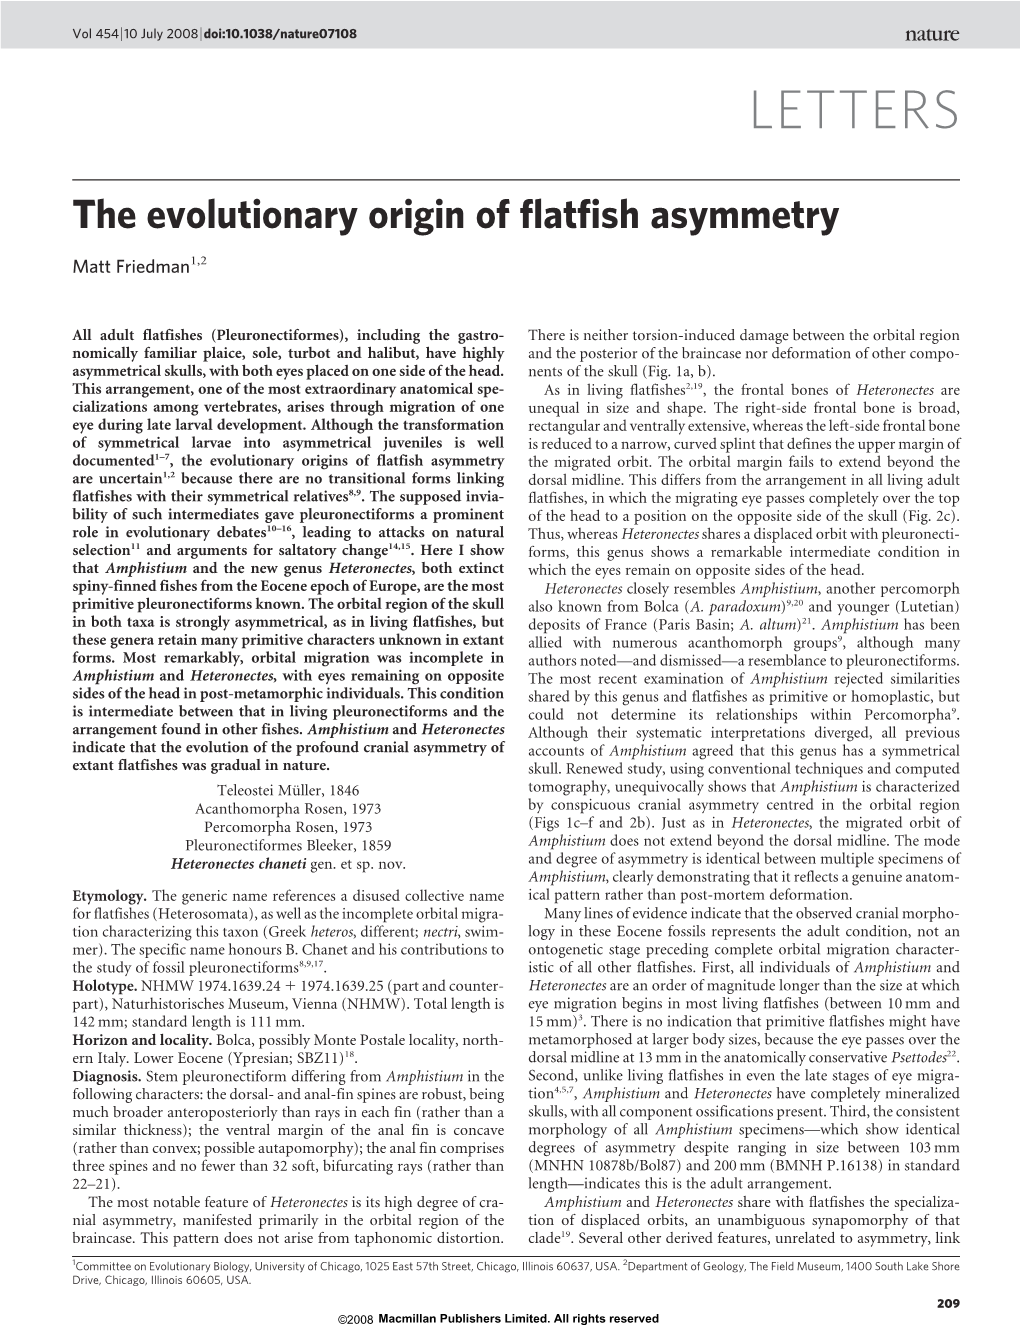 The Evolutionary Origin of Flatfish Asymmetry